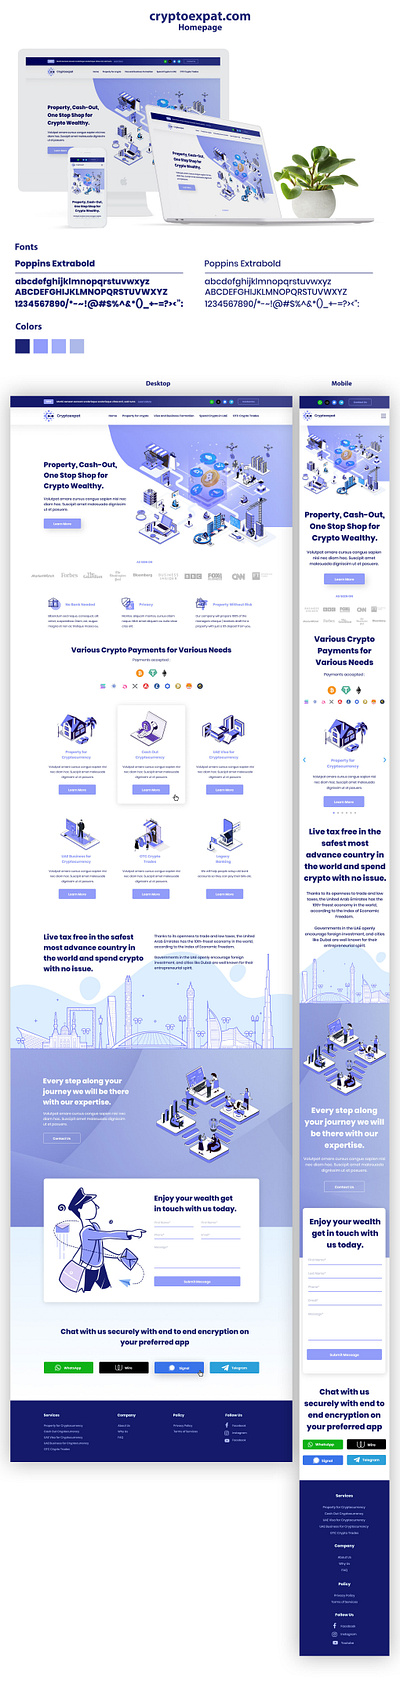 CryptoExpat.com landing page web design wesite design